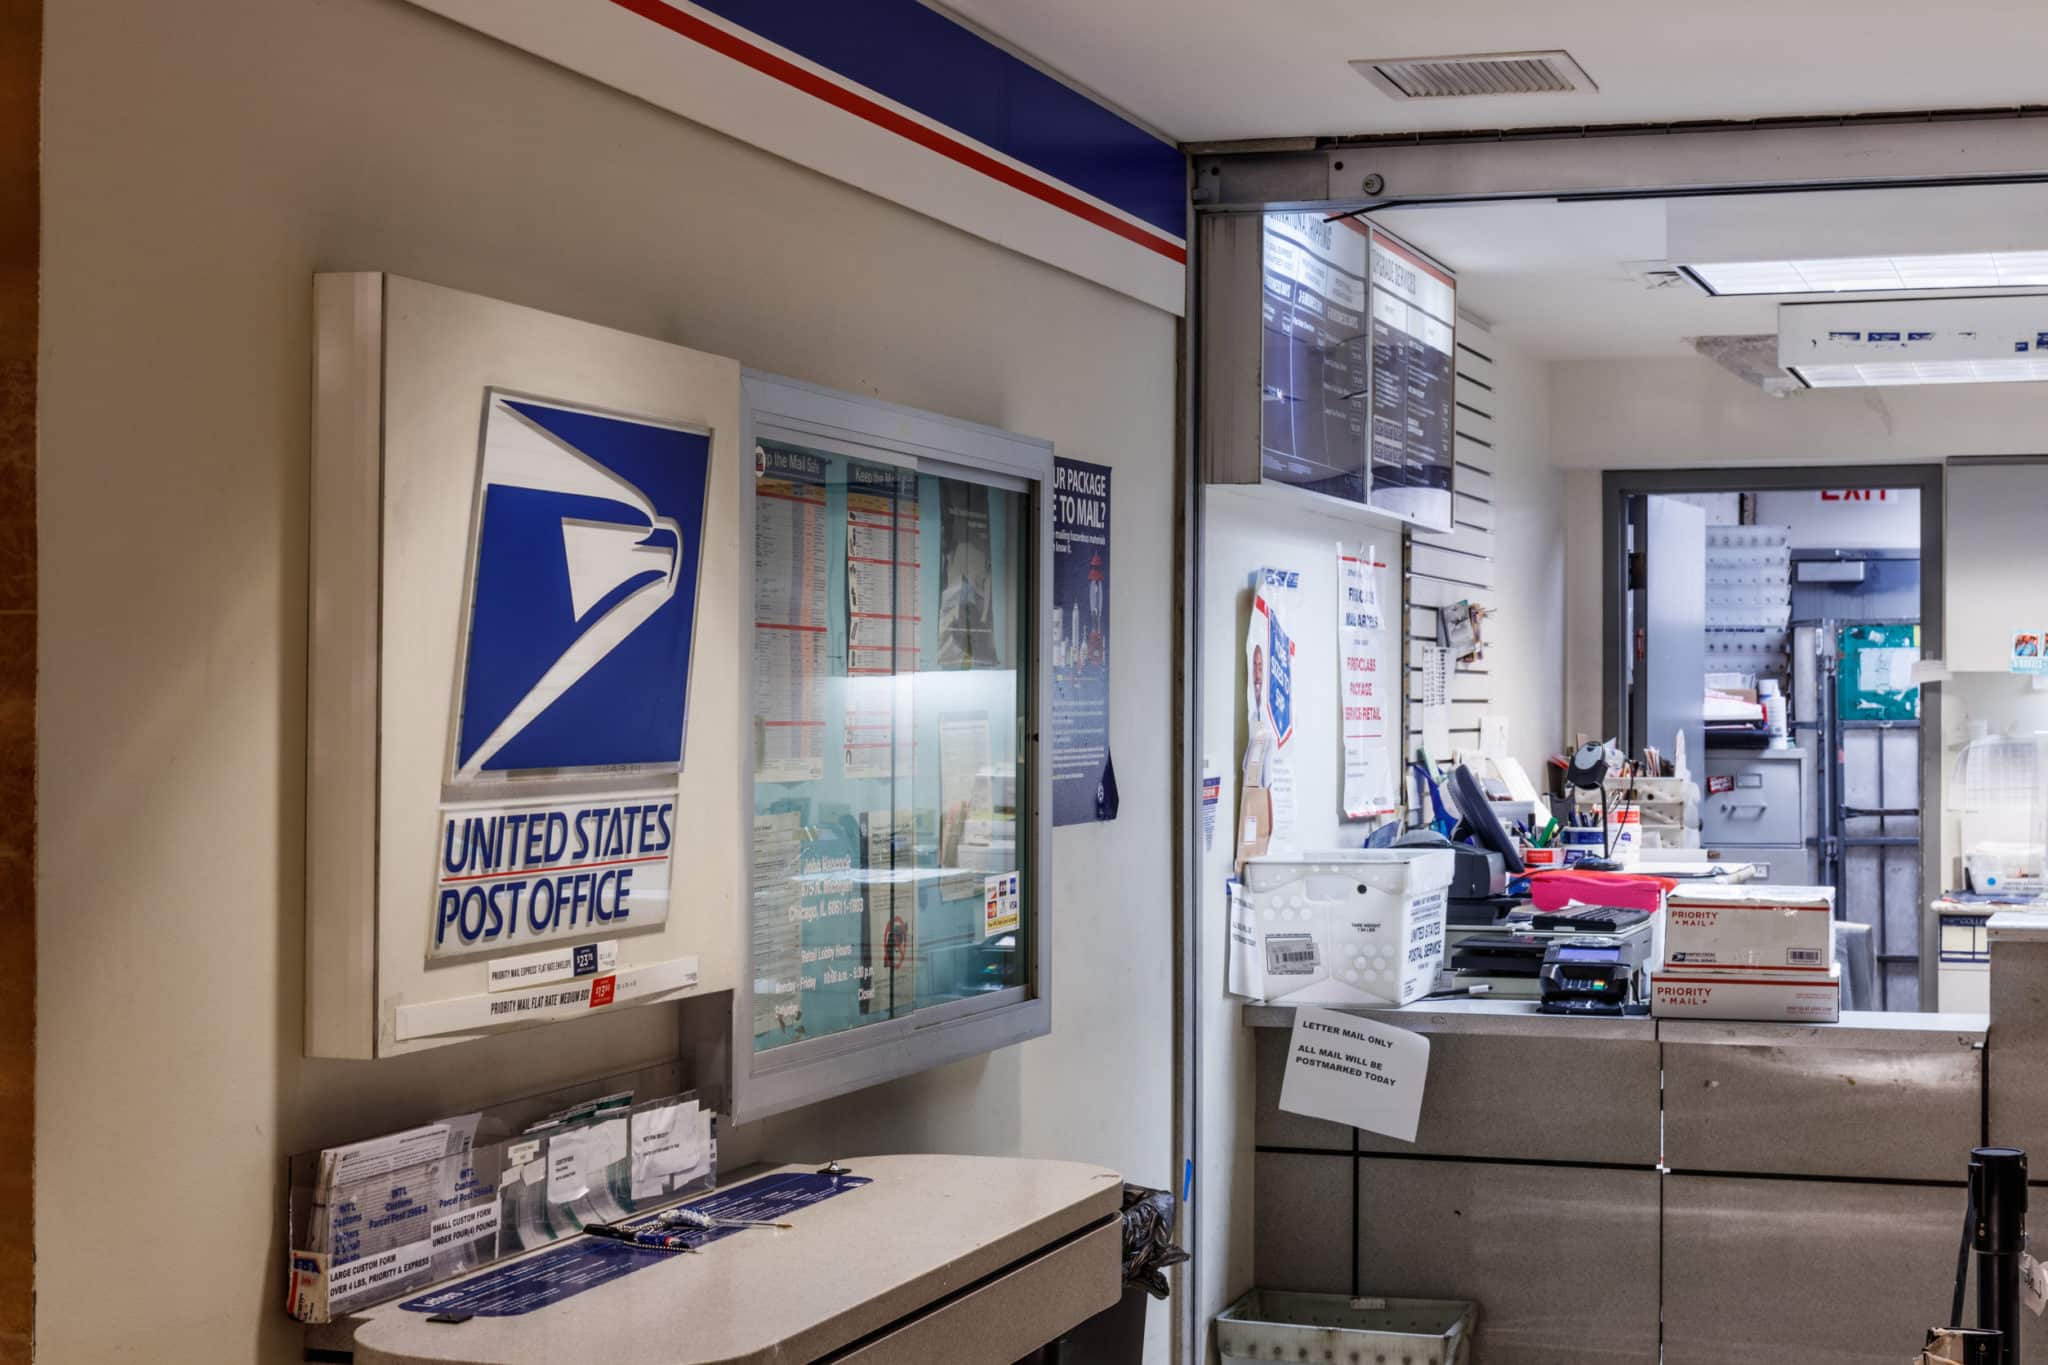 USPS Post Office